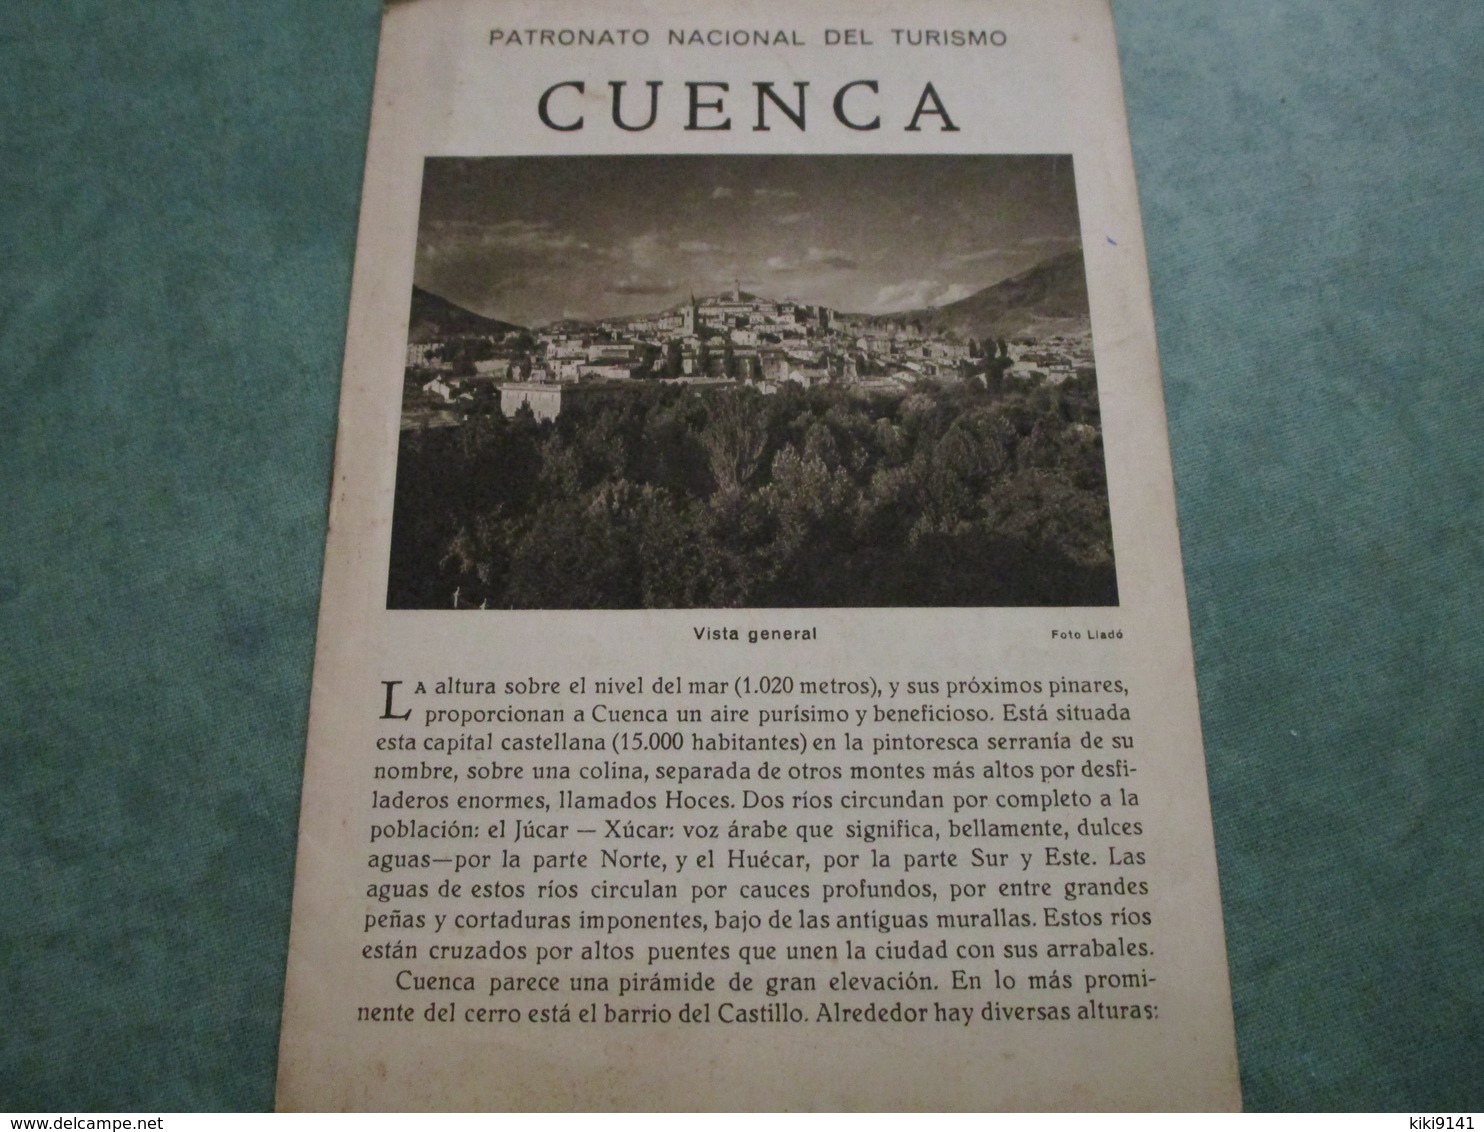 PATRONATO NATIONAL DEL TURISMO (8 Pages Illustrées) - Cuenca